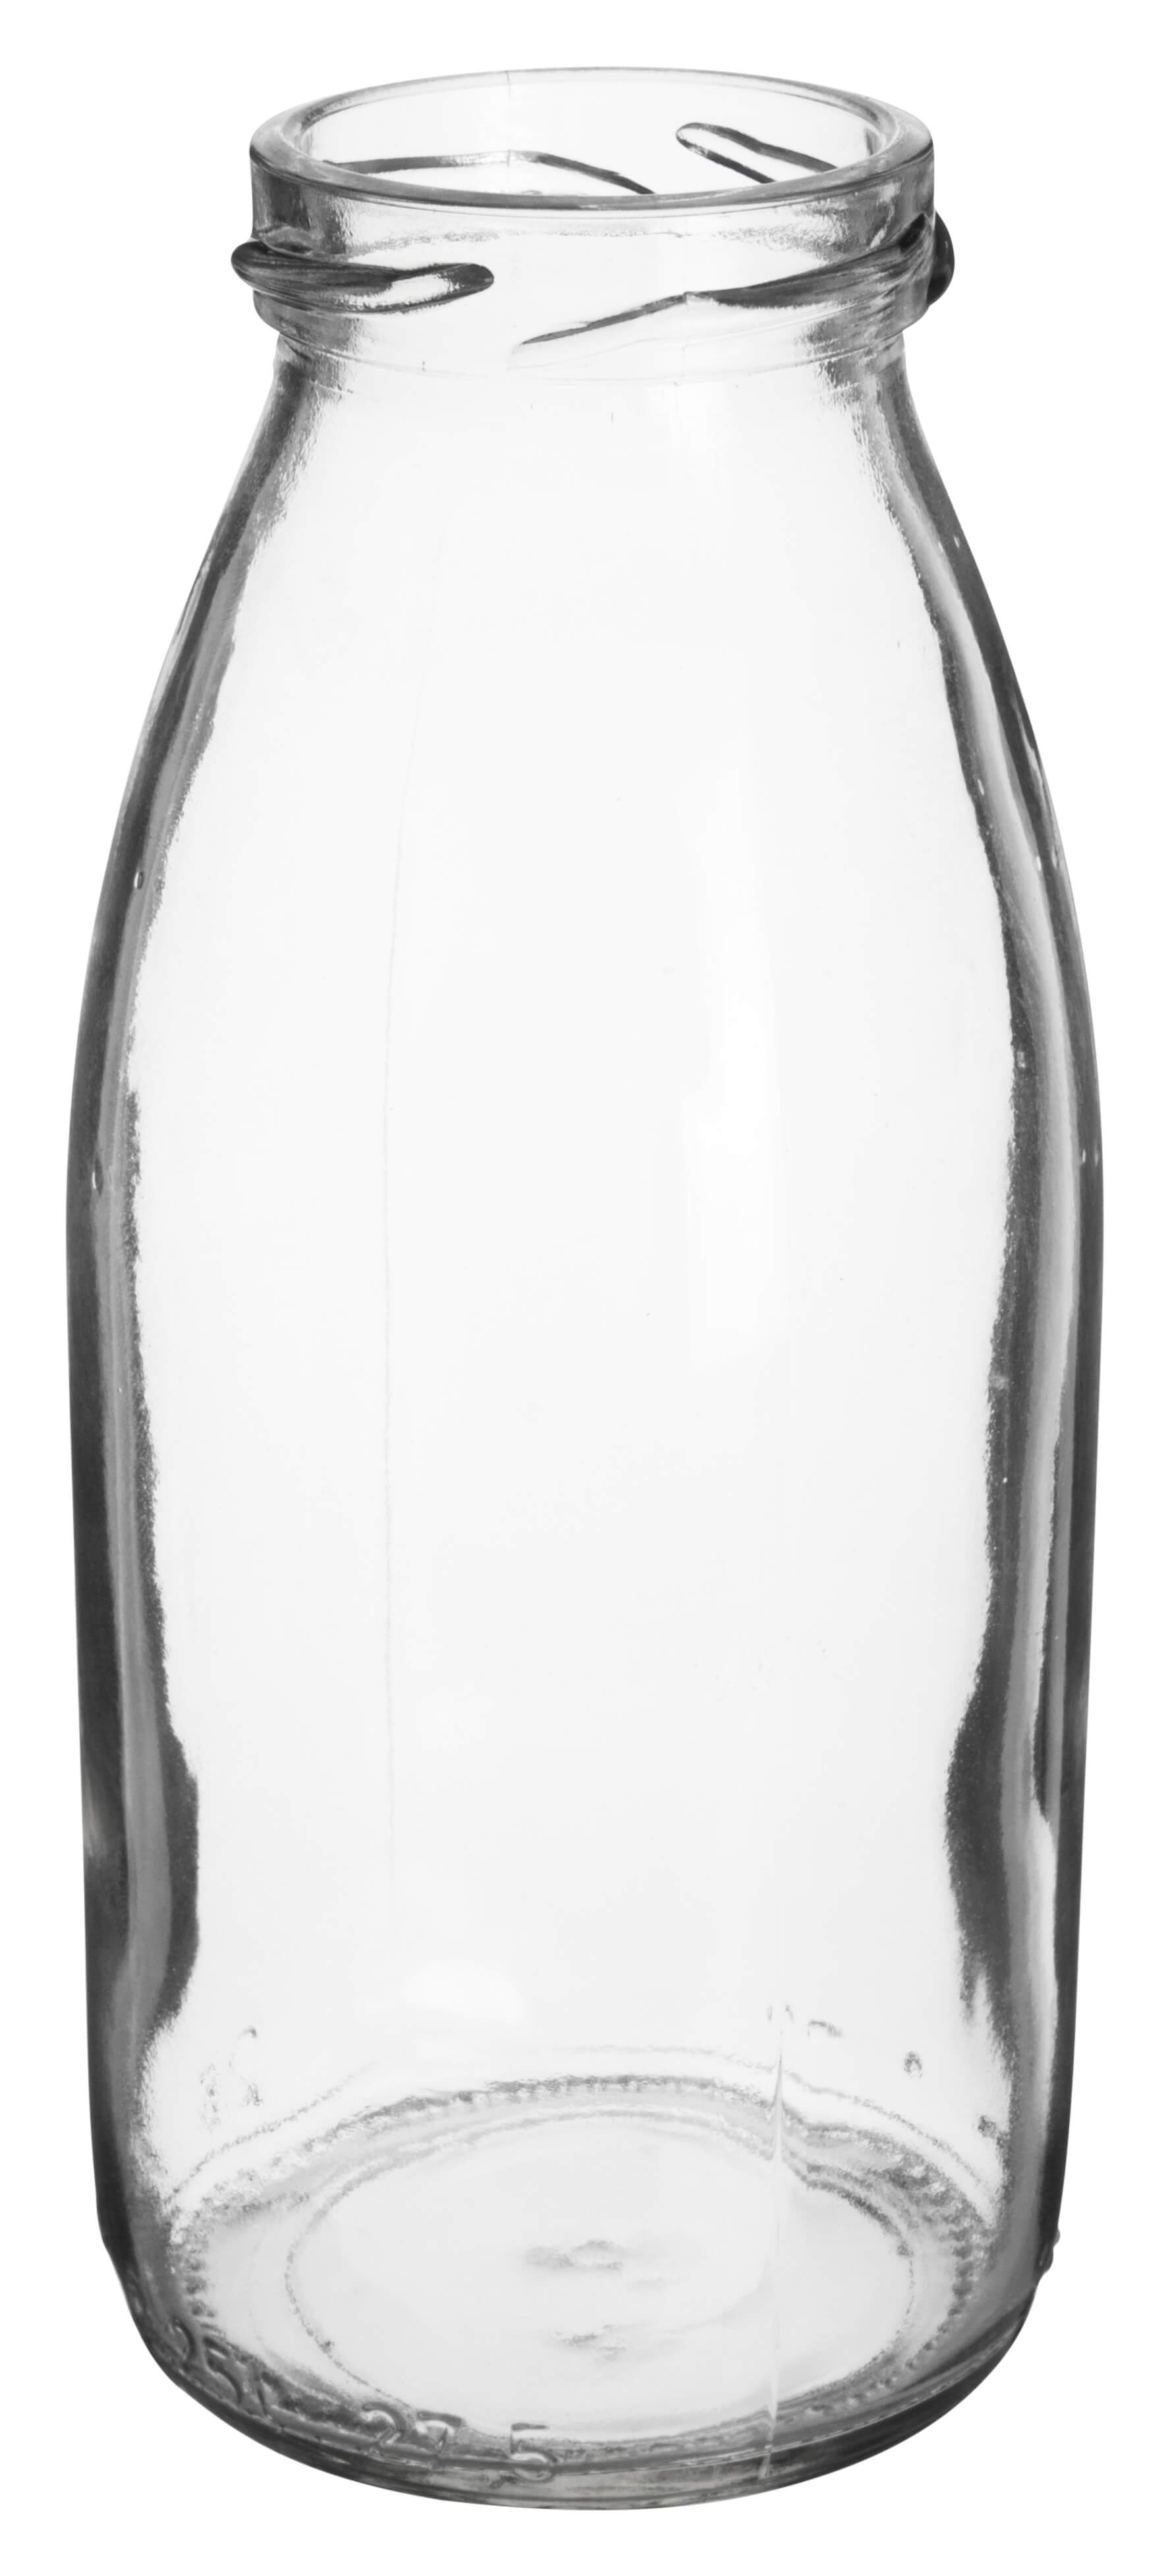 Milk bottle - 250ml